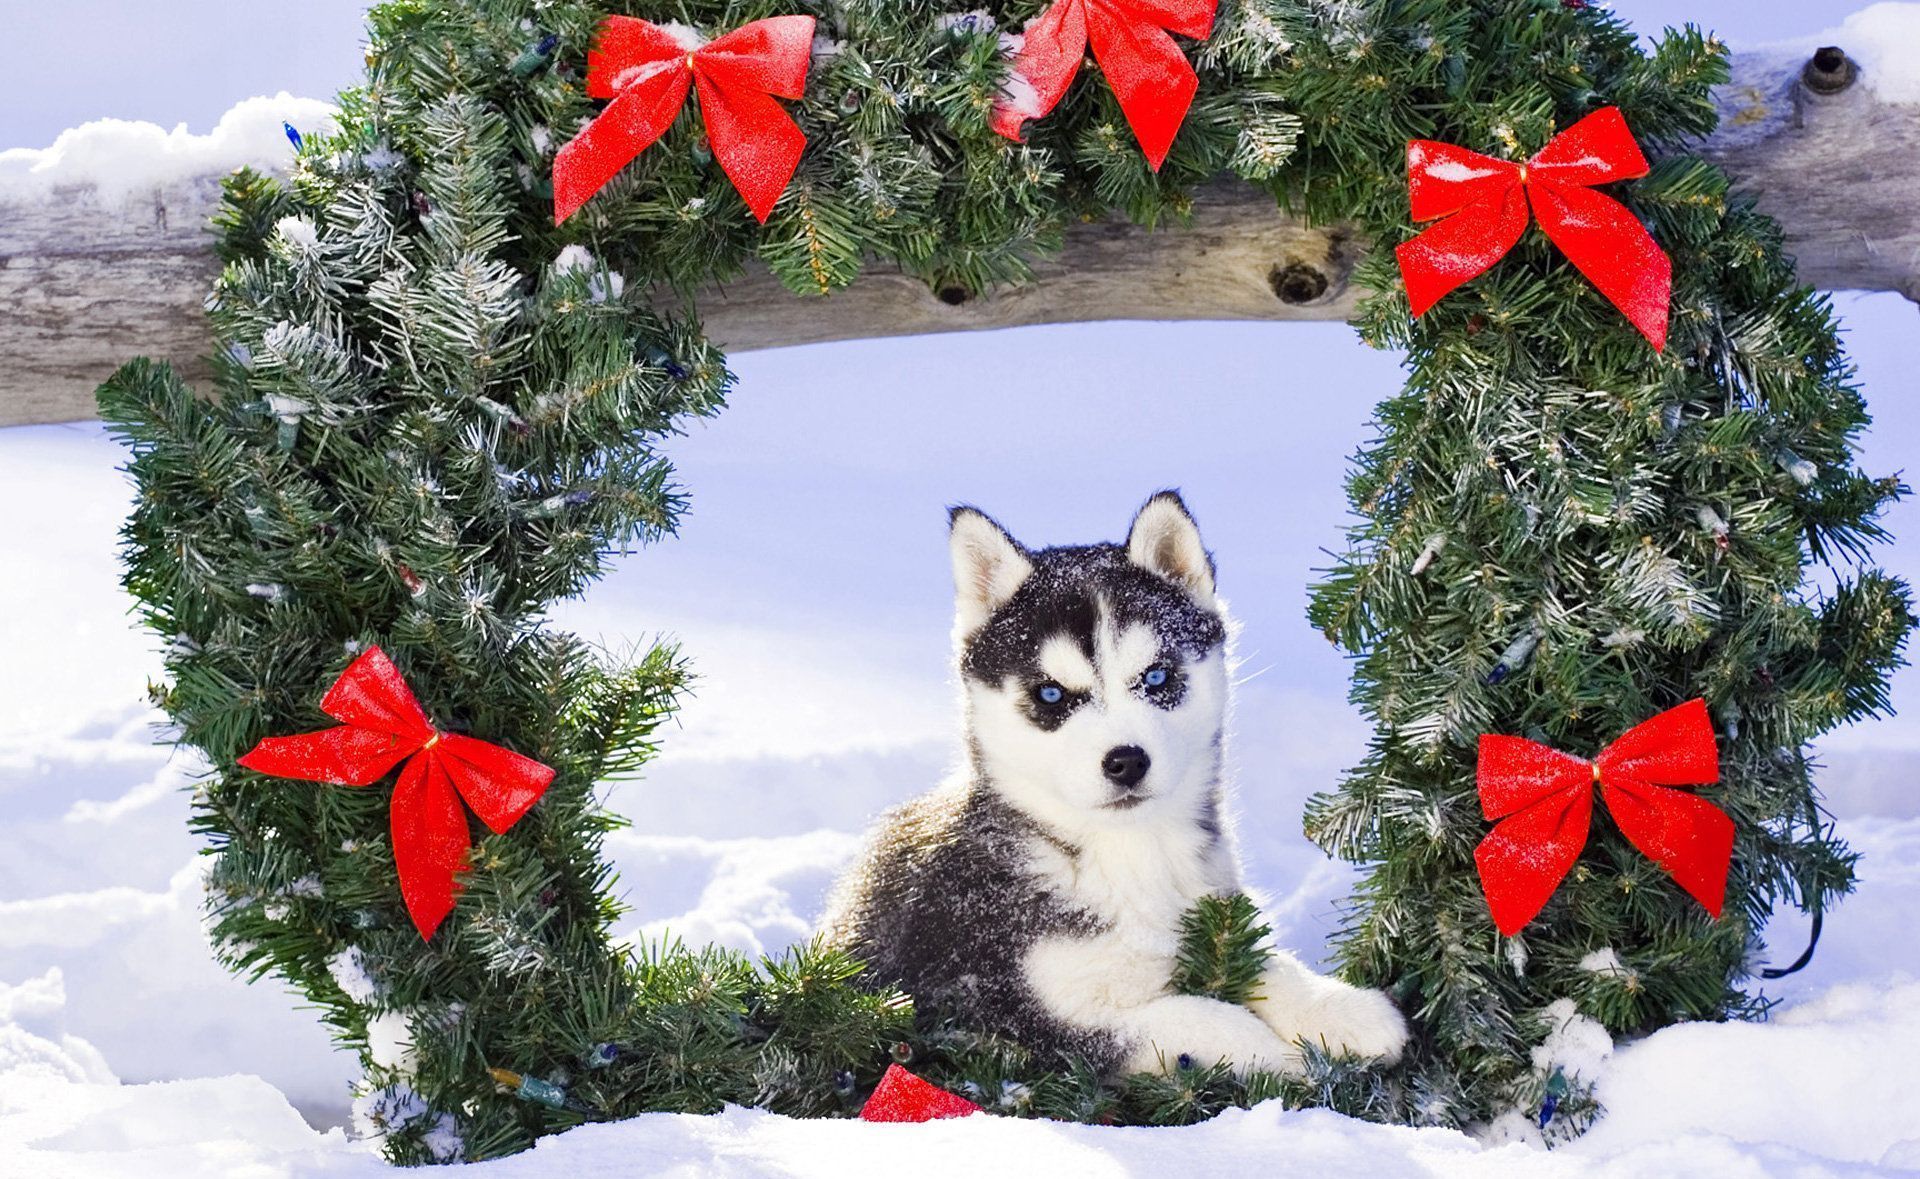 aww! cutest husky ever!. Dog breeds picture, Dog holiday, Christmas dog